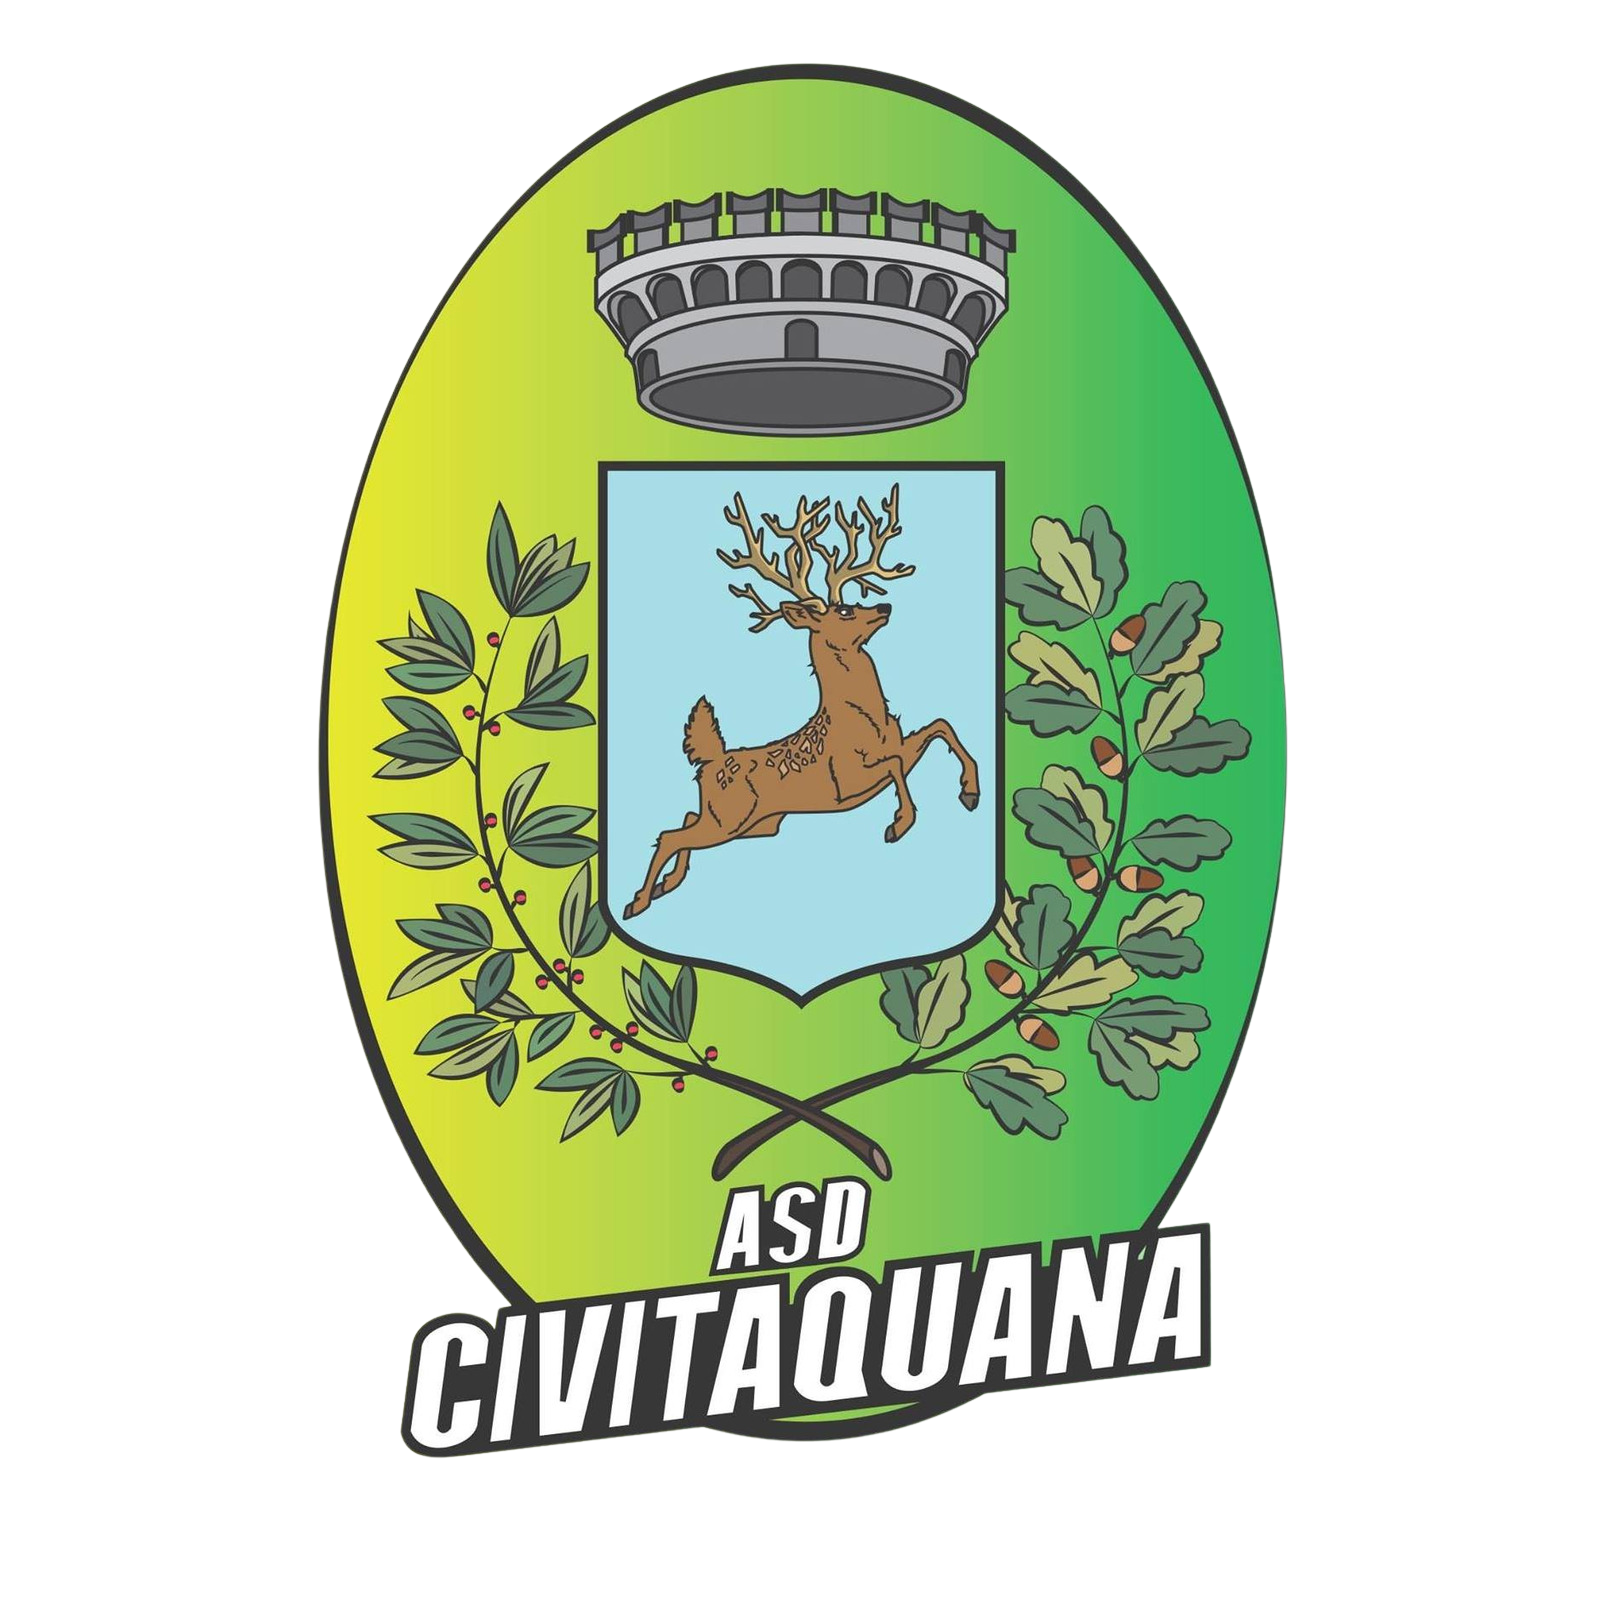 ASD Civitaquana